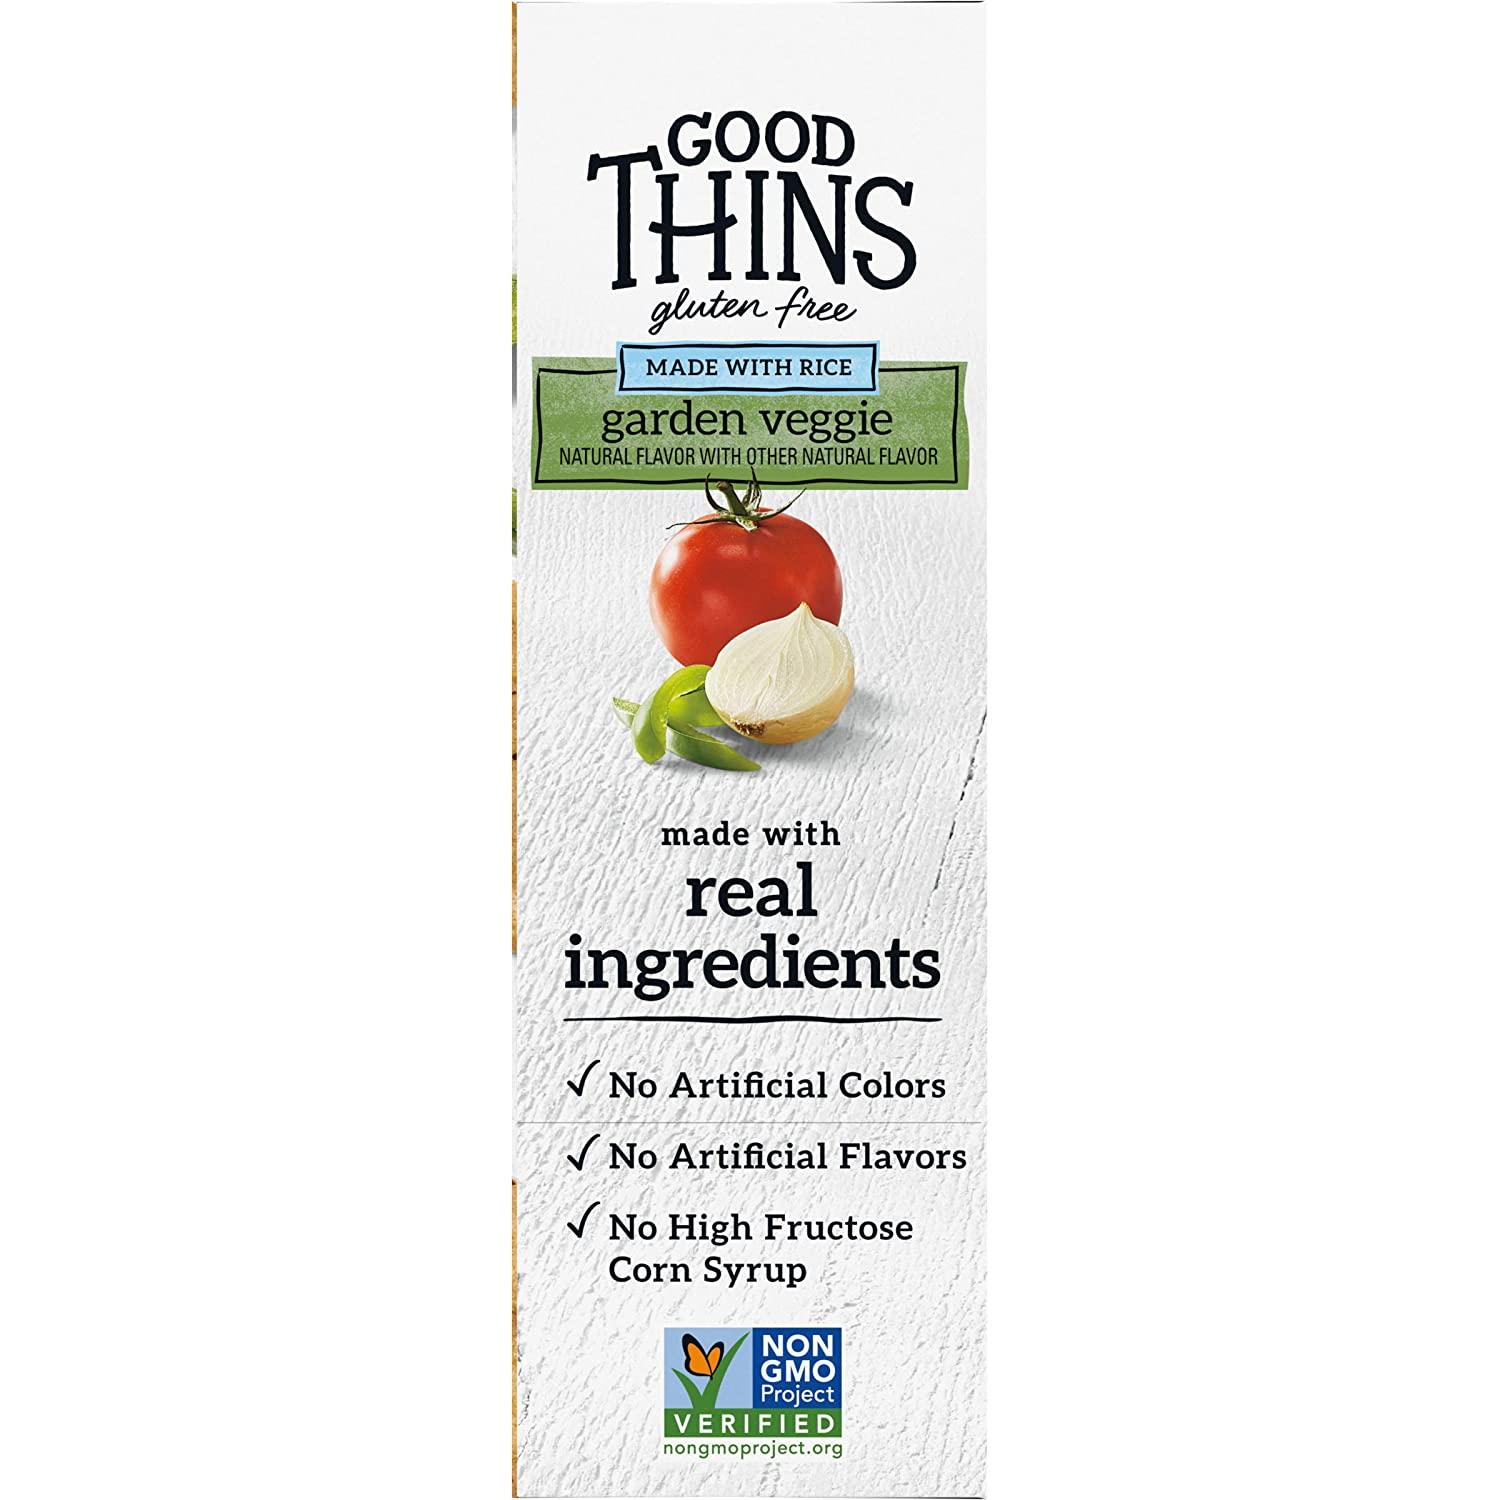 Good Thins Garden Veggie Good Thins Rice Snacks - Gluten Free Reviews